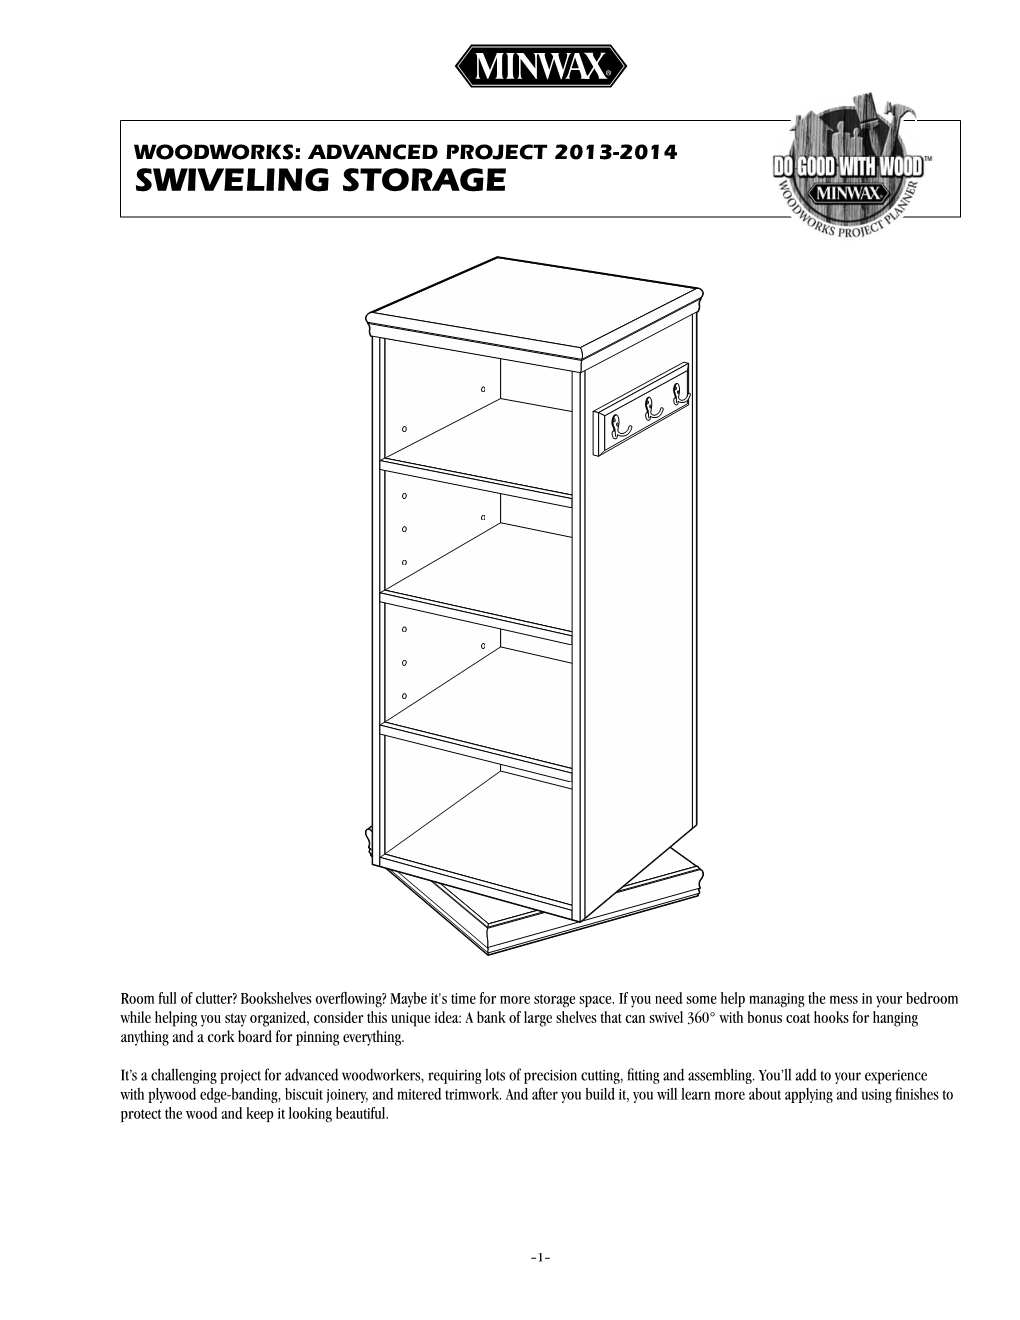 Swiveling Storage